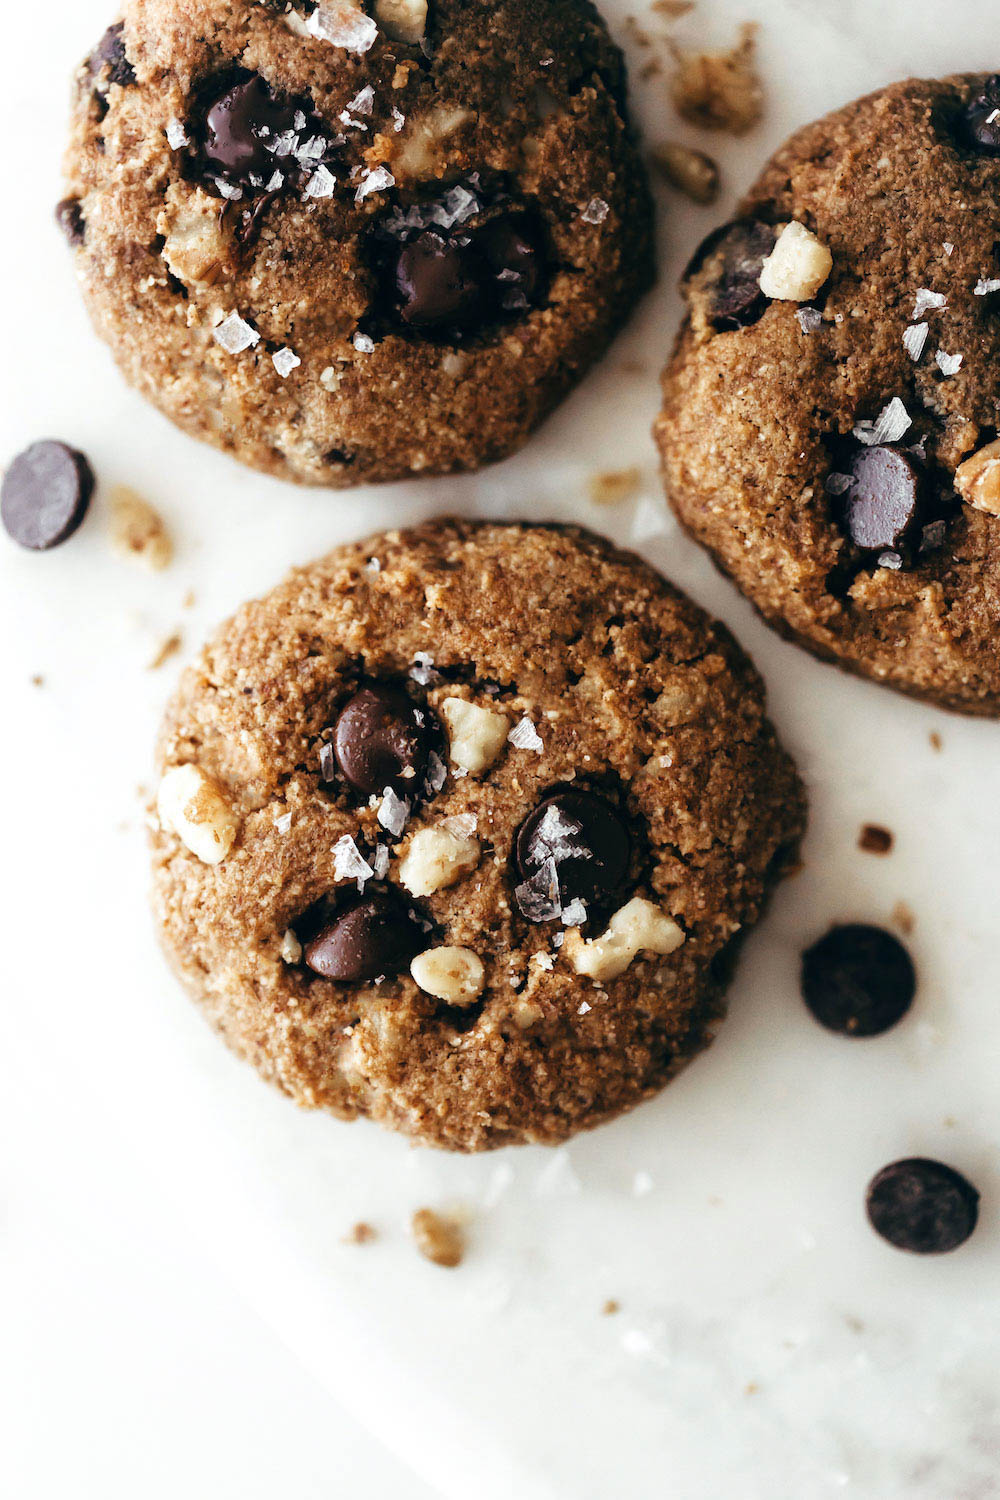 Chunky Monkey Cookies (vegan + paleo)